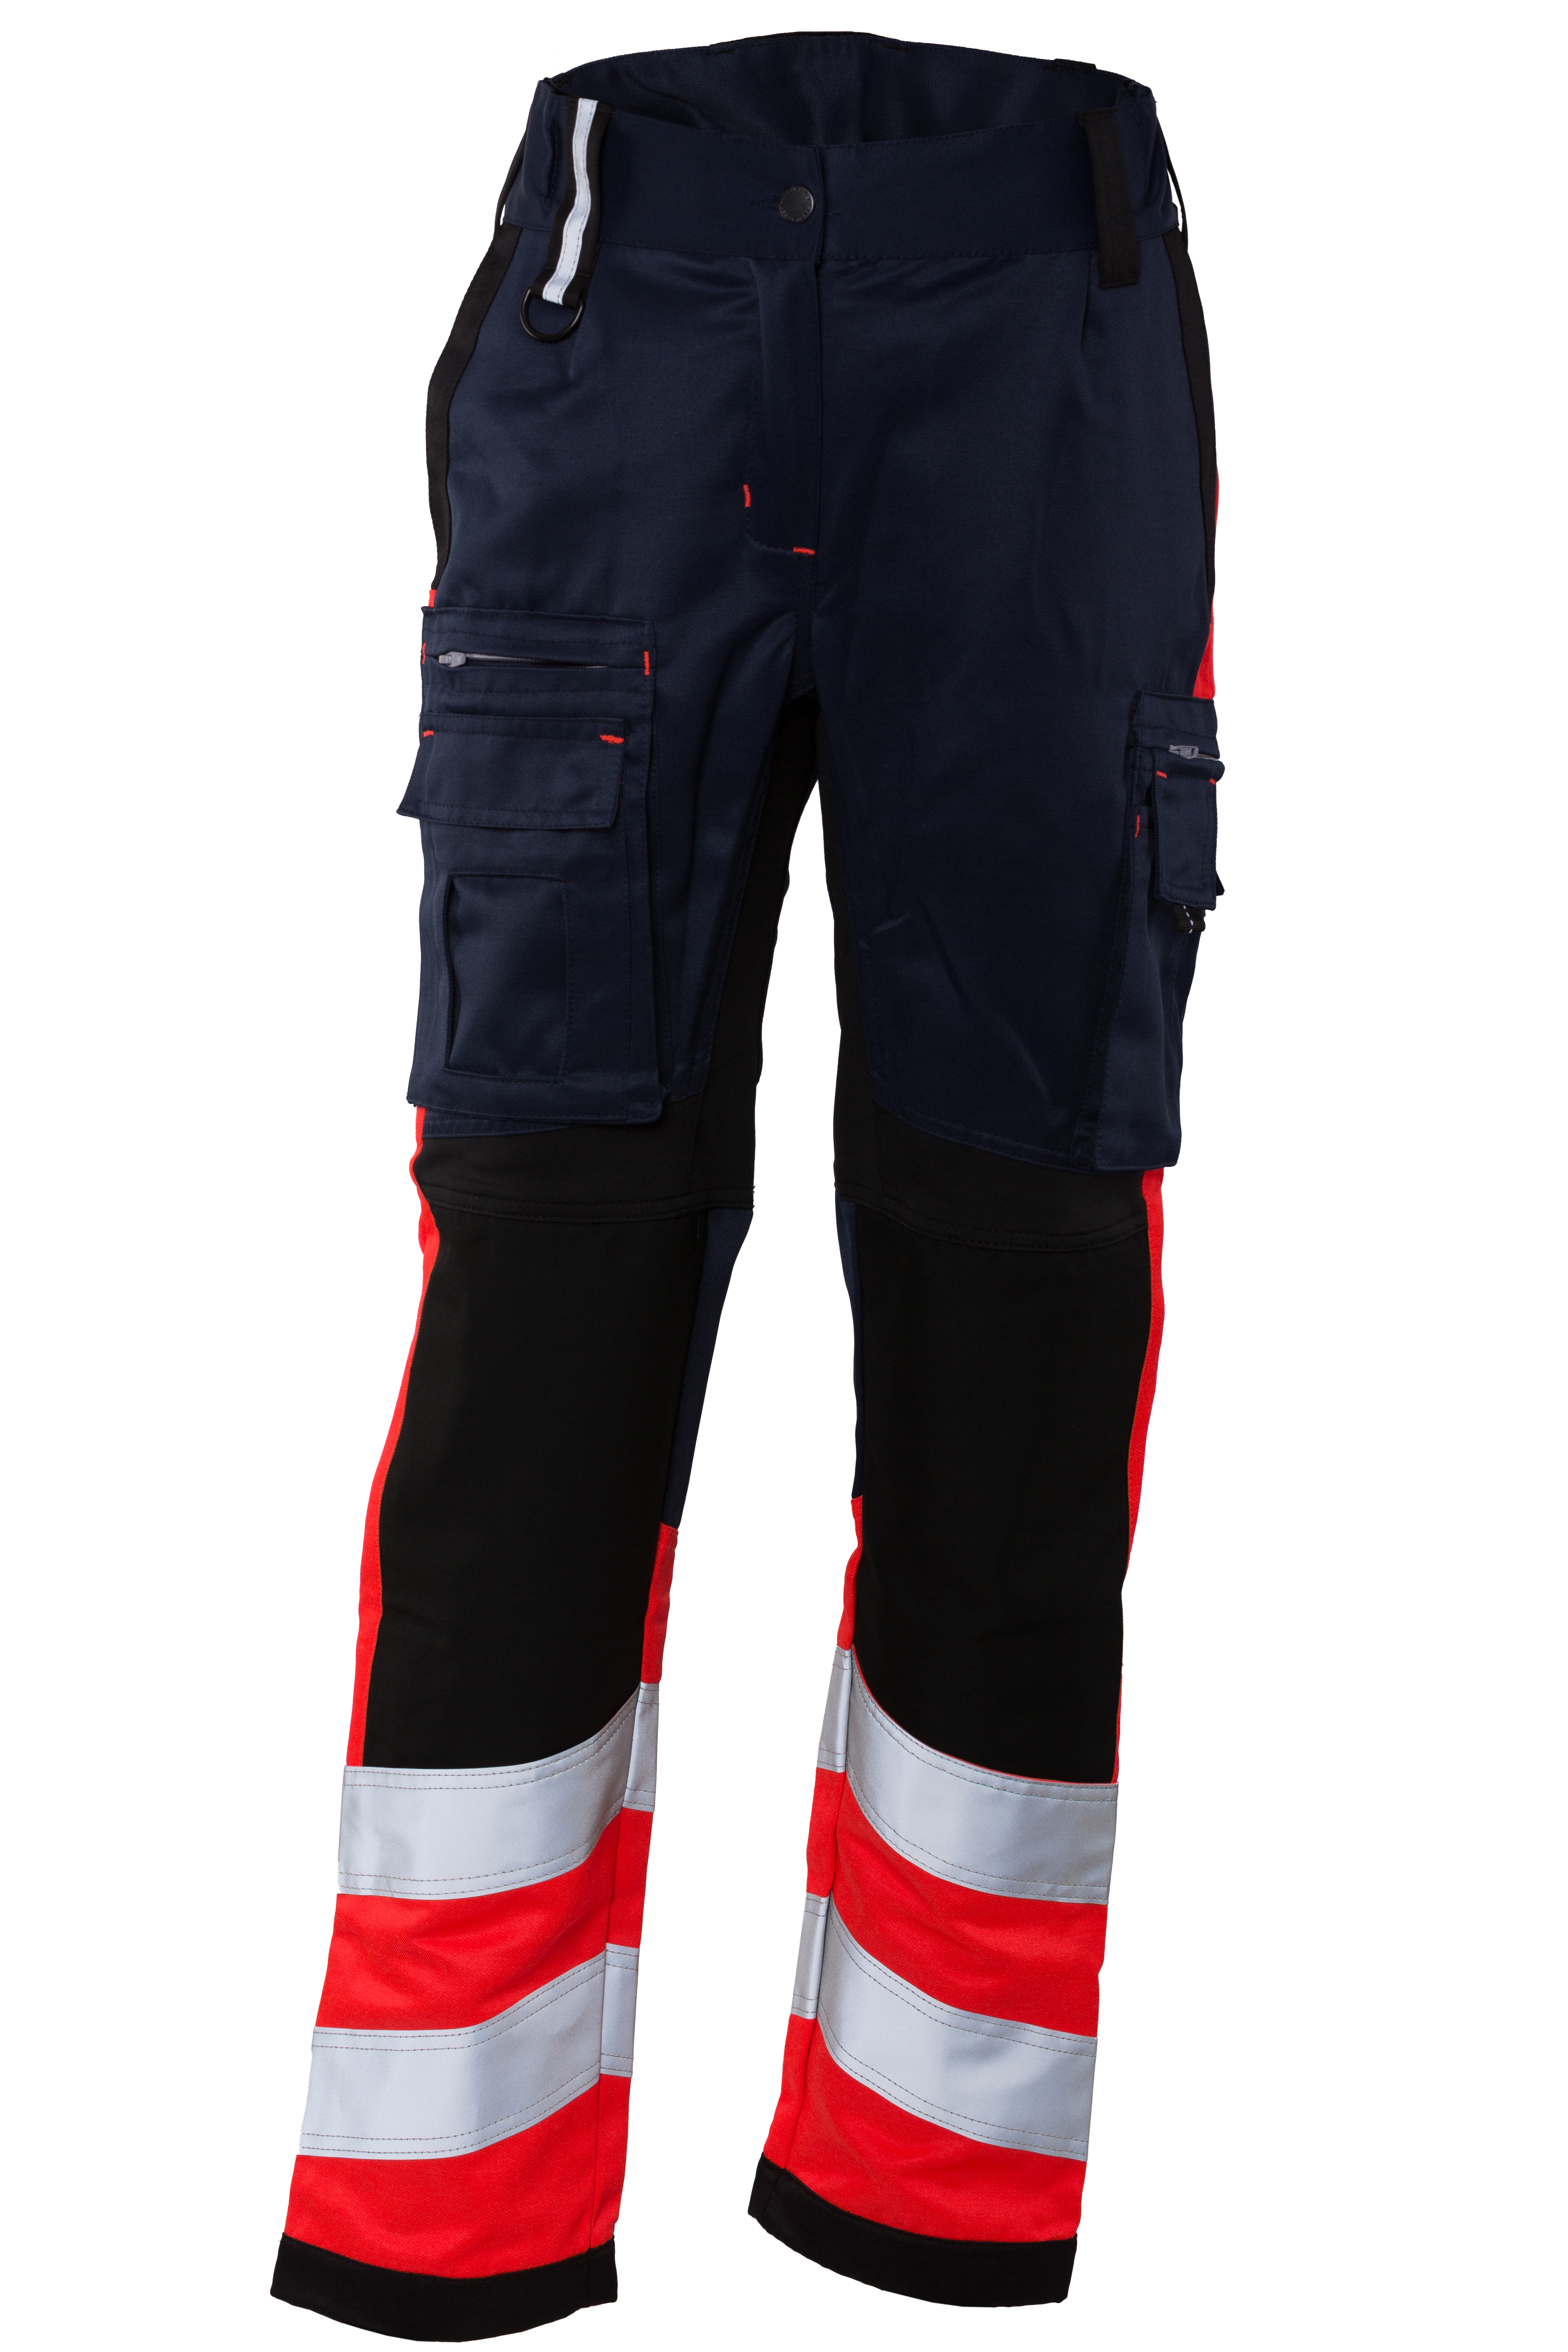 Rescuewear Damen Hose Stretch HiVis Klasse 1 Marineblau / Schwarz / Neon Rot  - 34